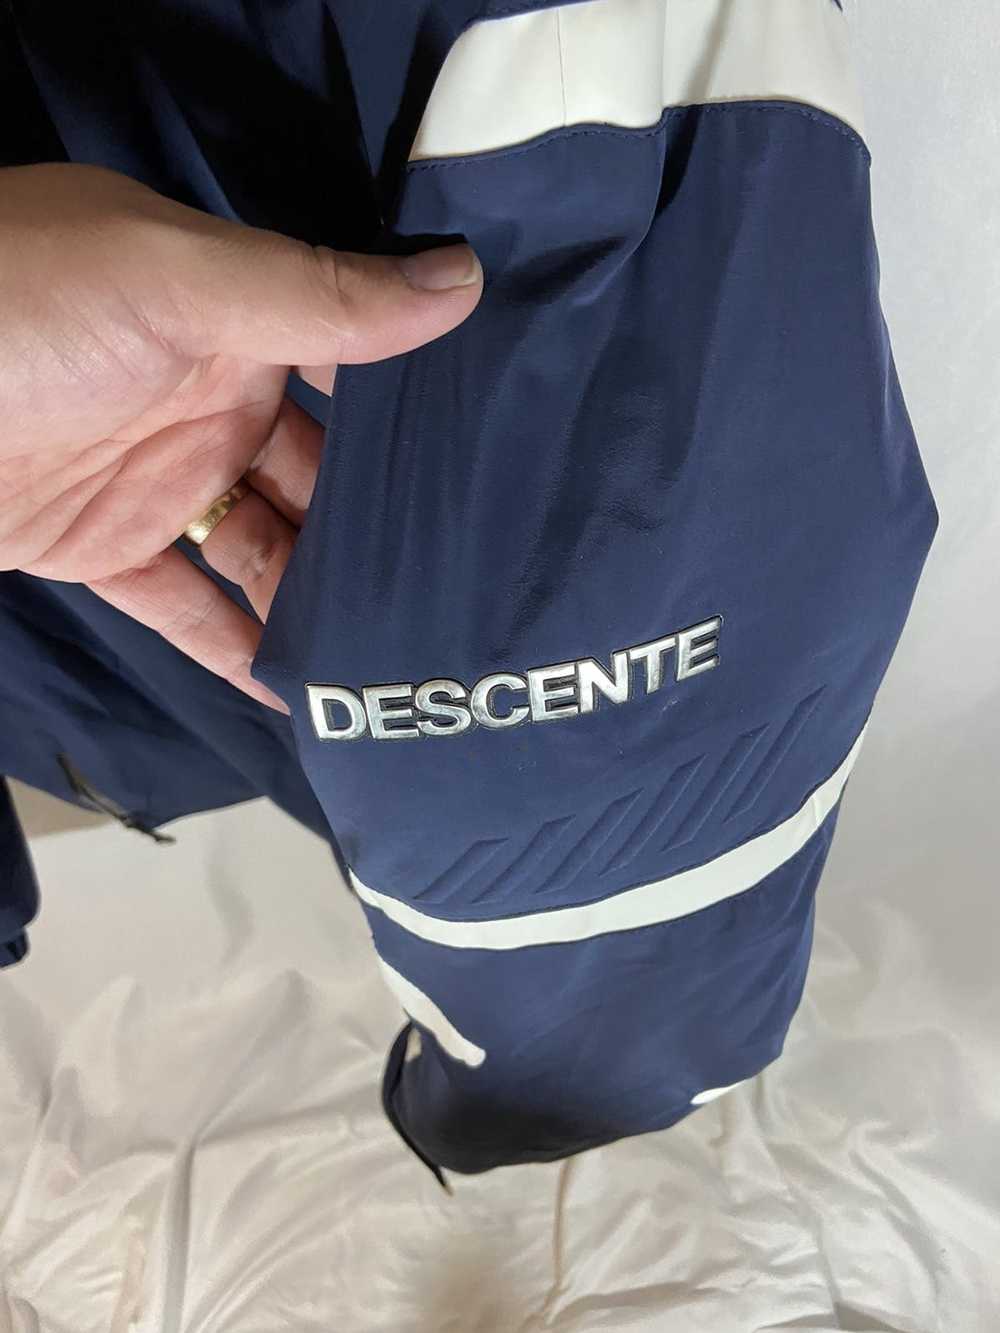 Descente Descente Insulated Jacket L - image 2